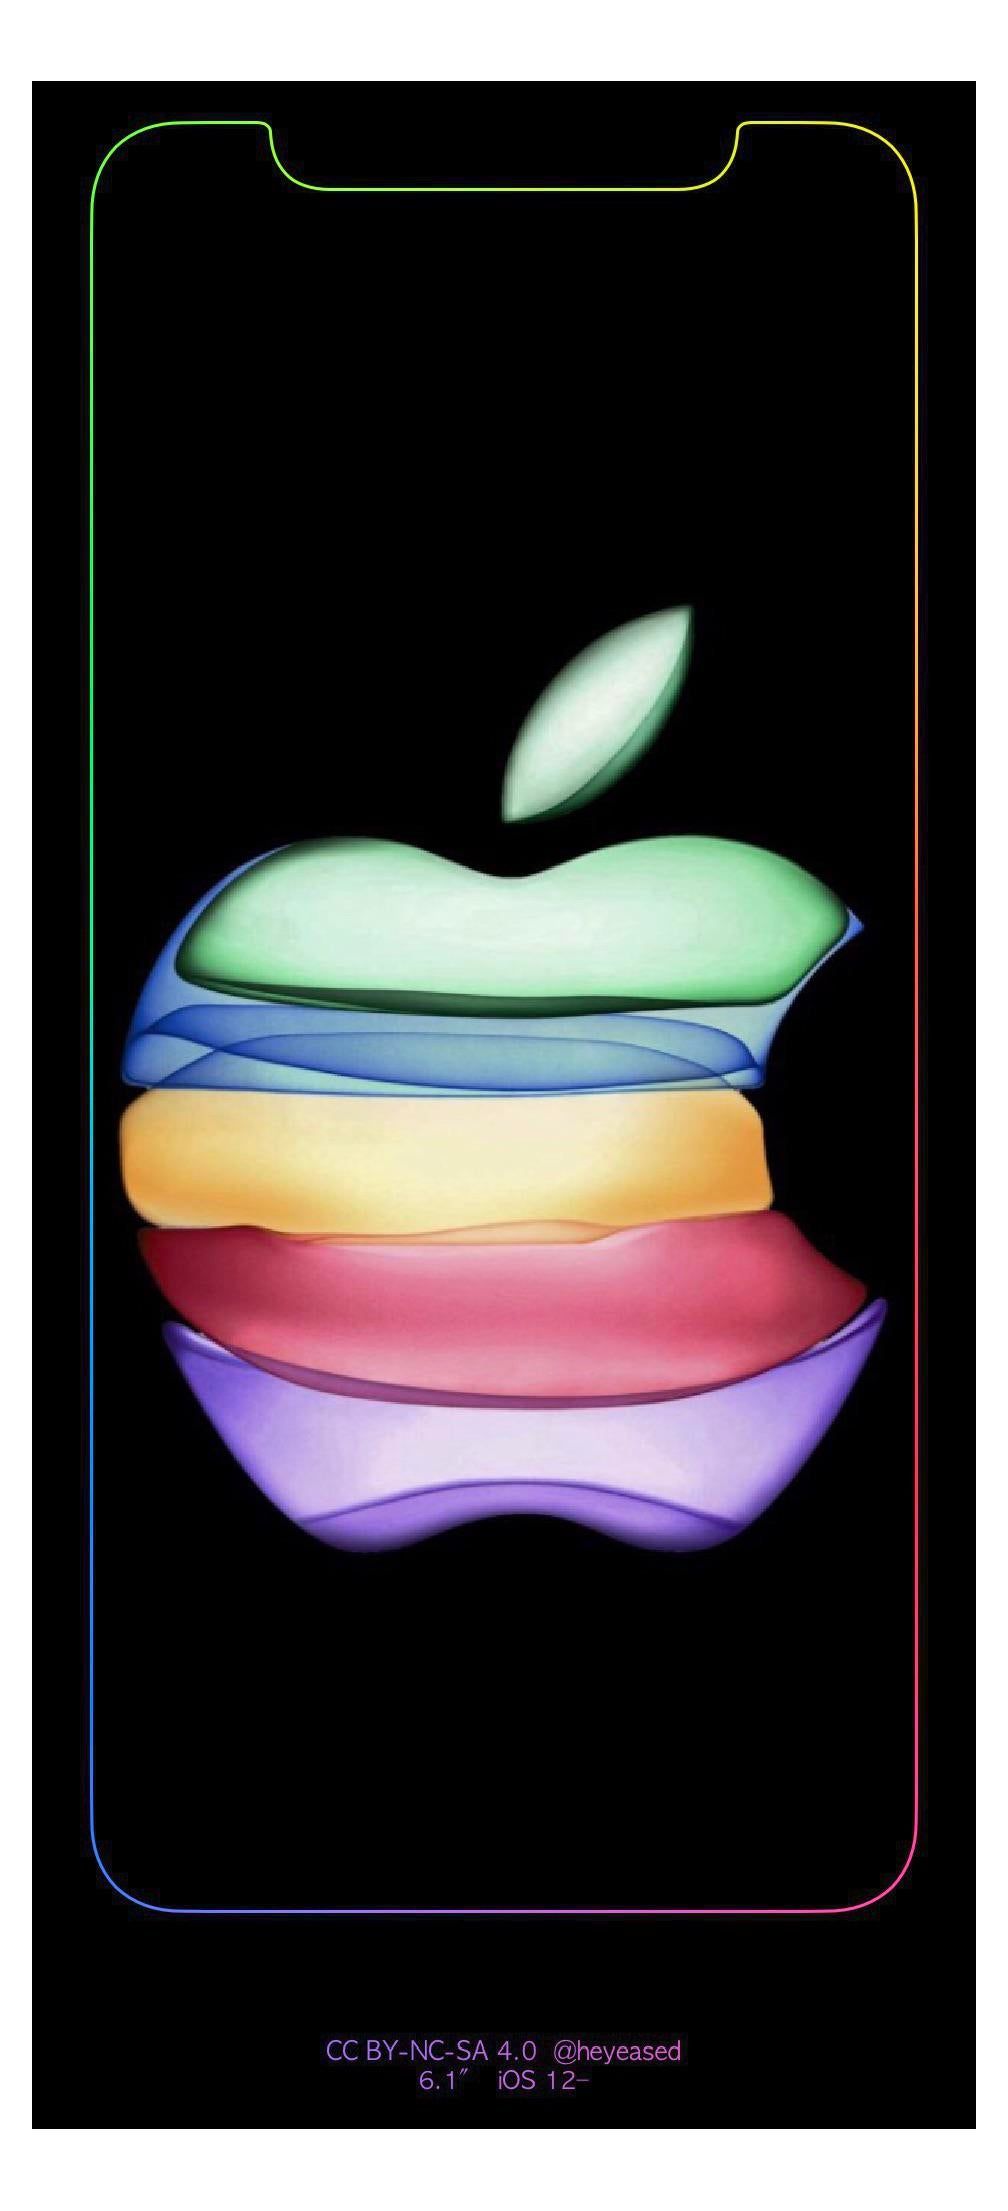 Apple invite logo with rainbow border wallpaper. iPhone X Wallpaper X Wallpaper HD